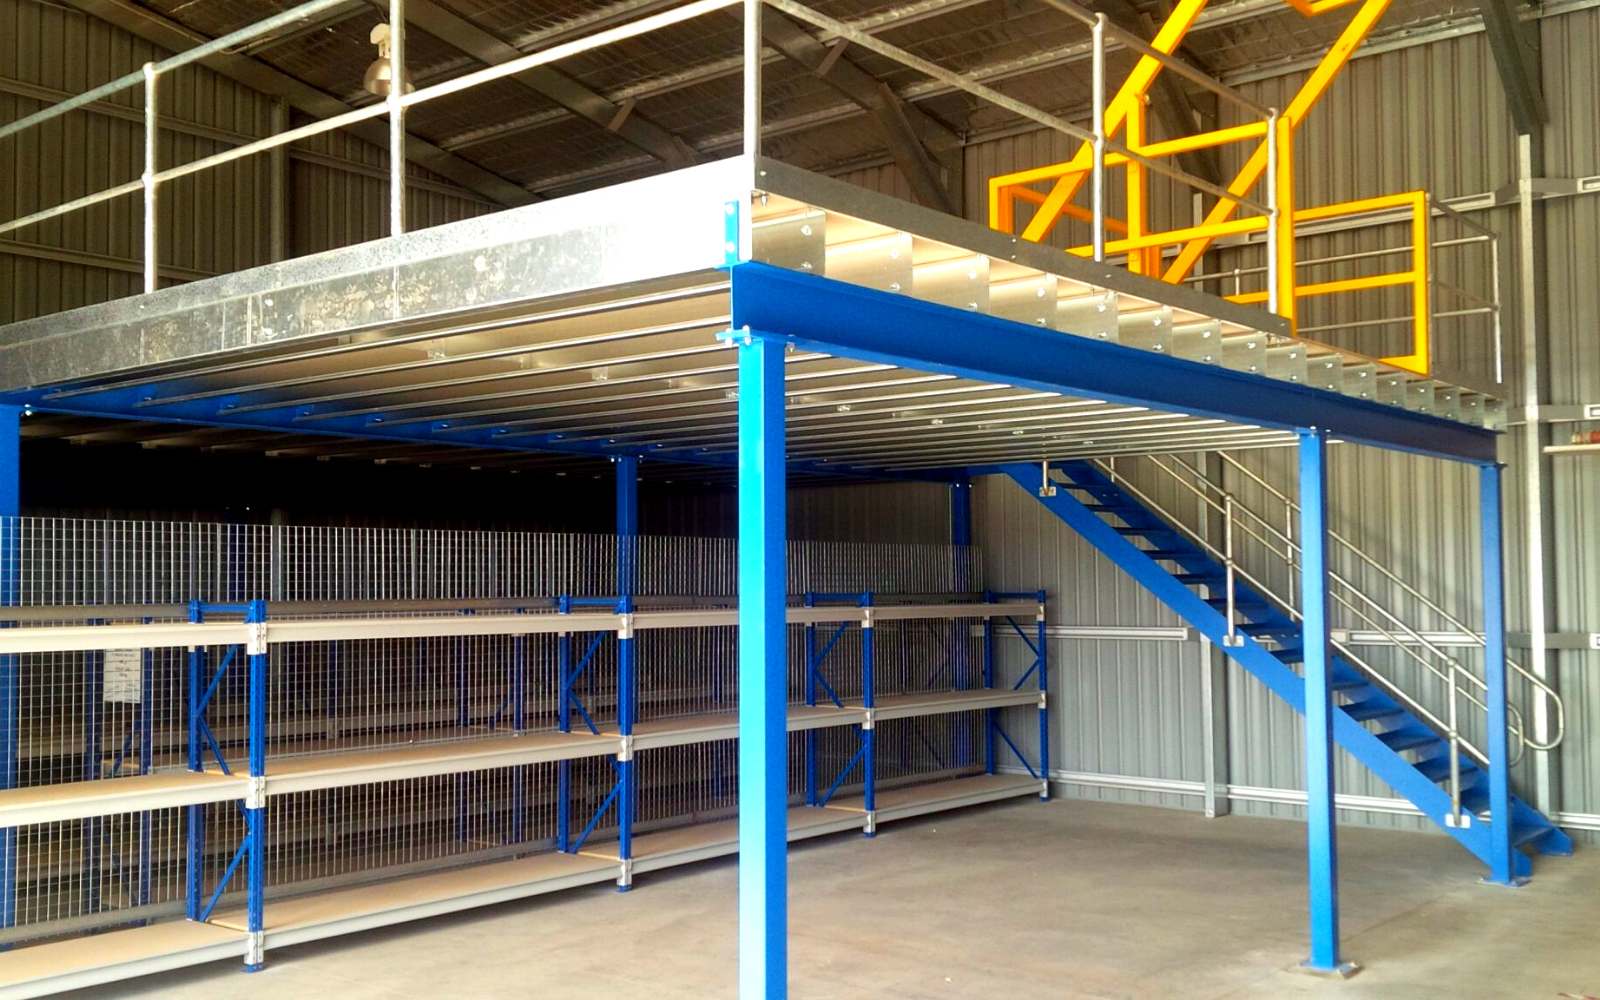 Mezzanine floor - Warehouse storage racking